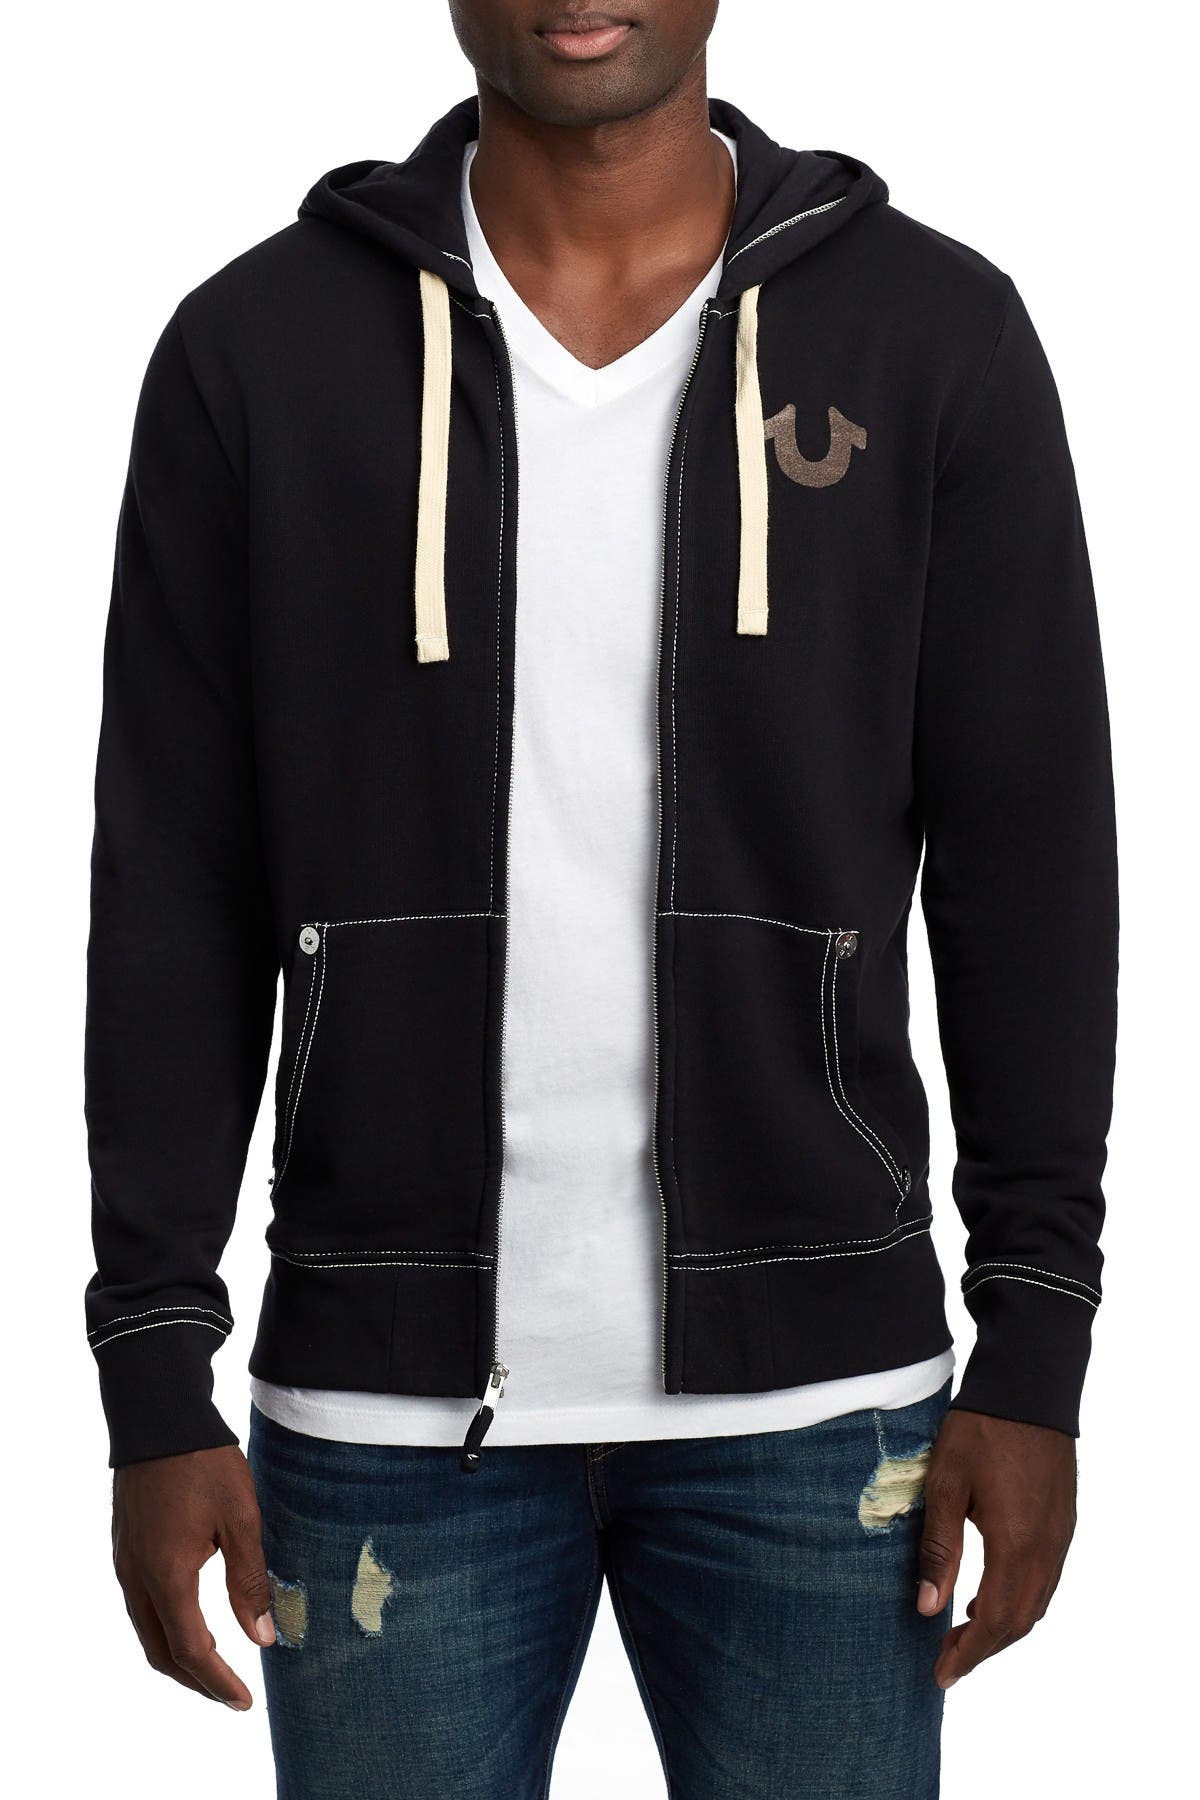 true religion full zip hoodie